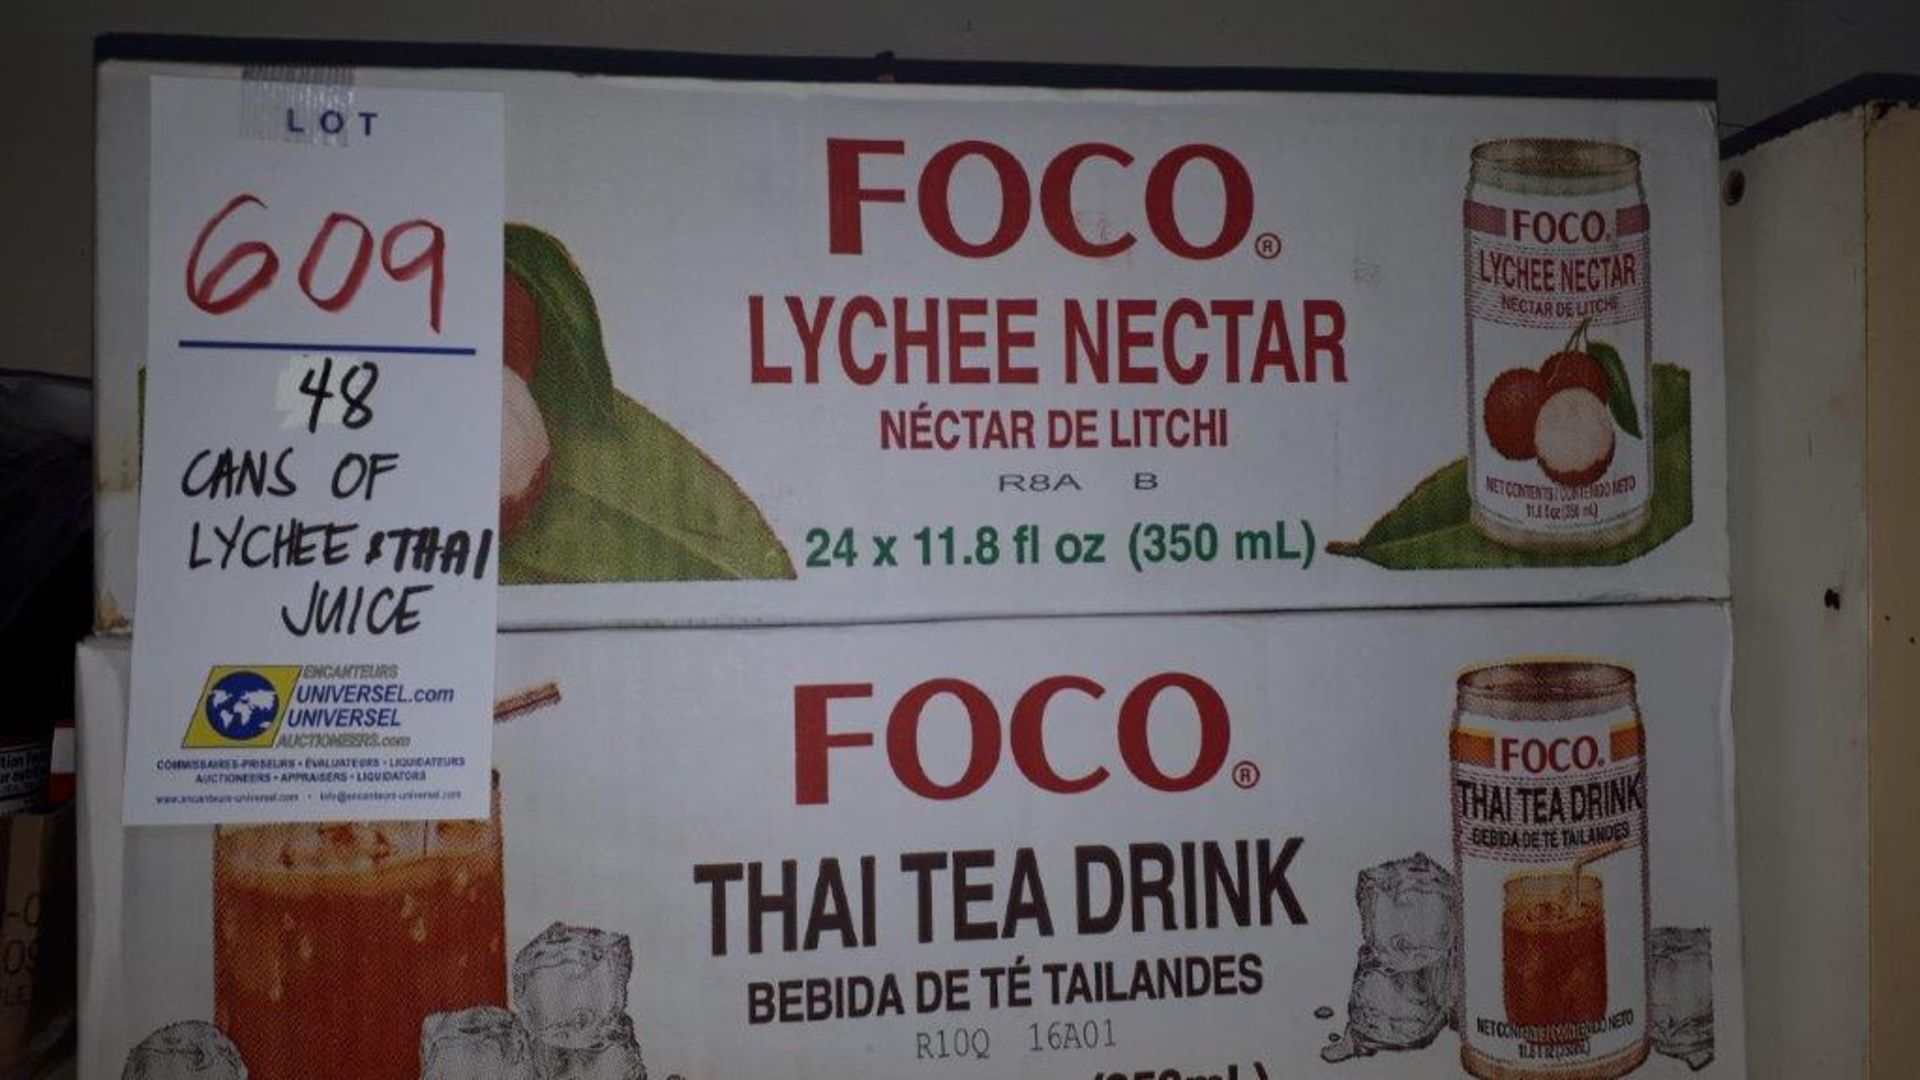 Foco lychee nectar & Thai tea drink